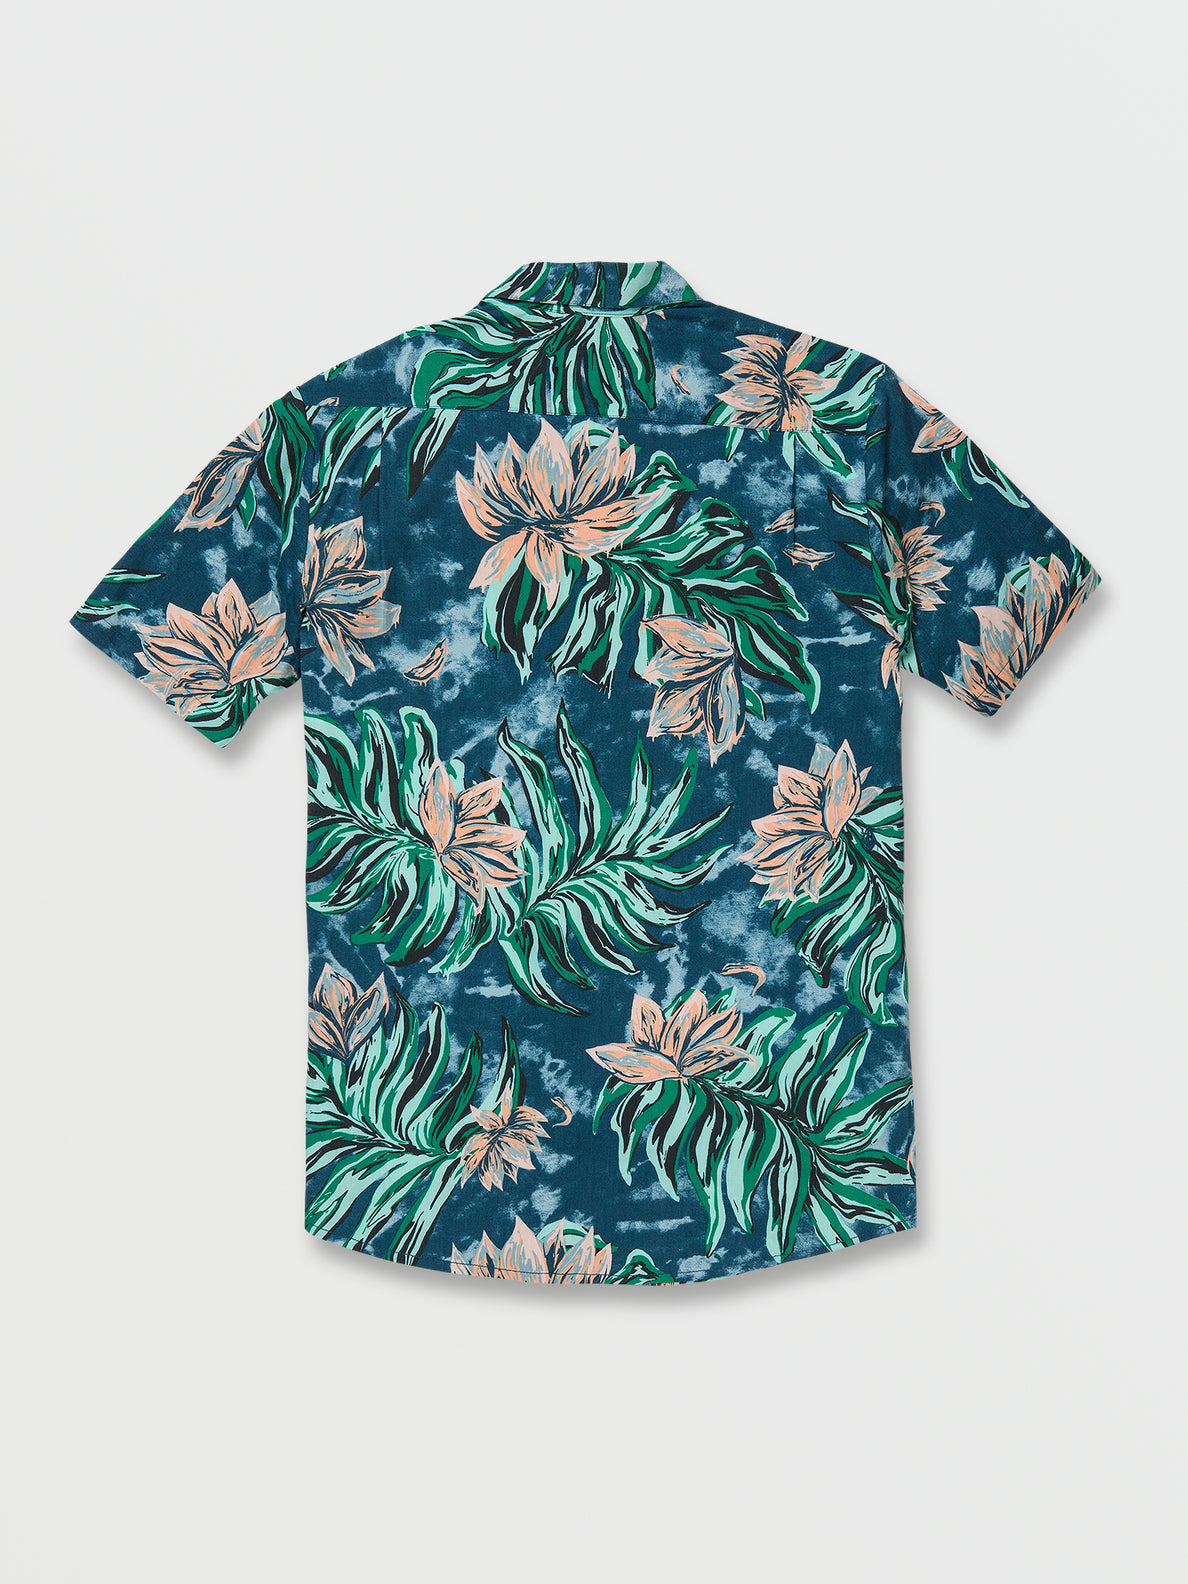 Marble Floral Short Sleeve Shirt - Aged Indigo